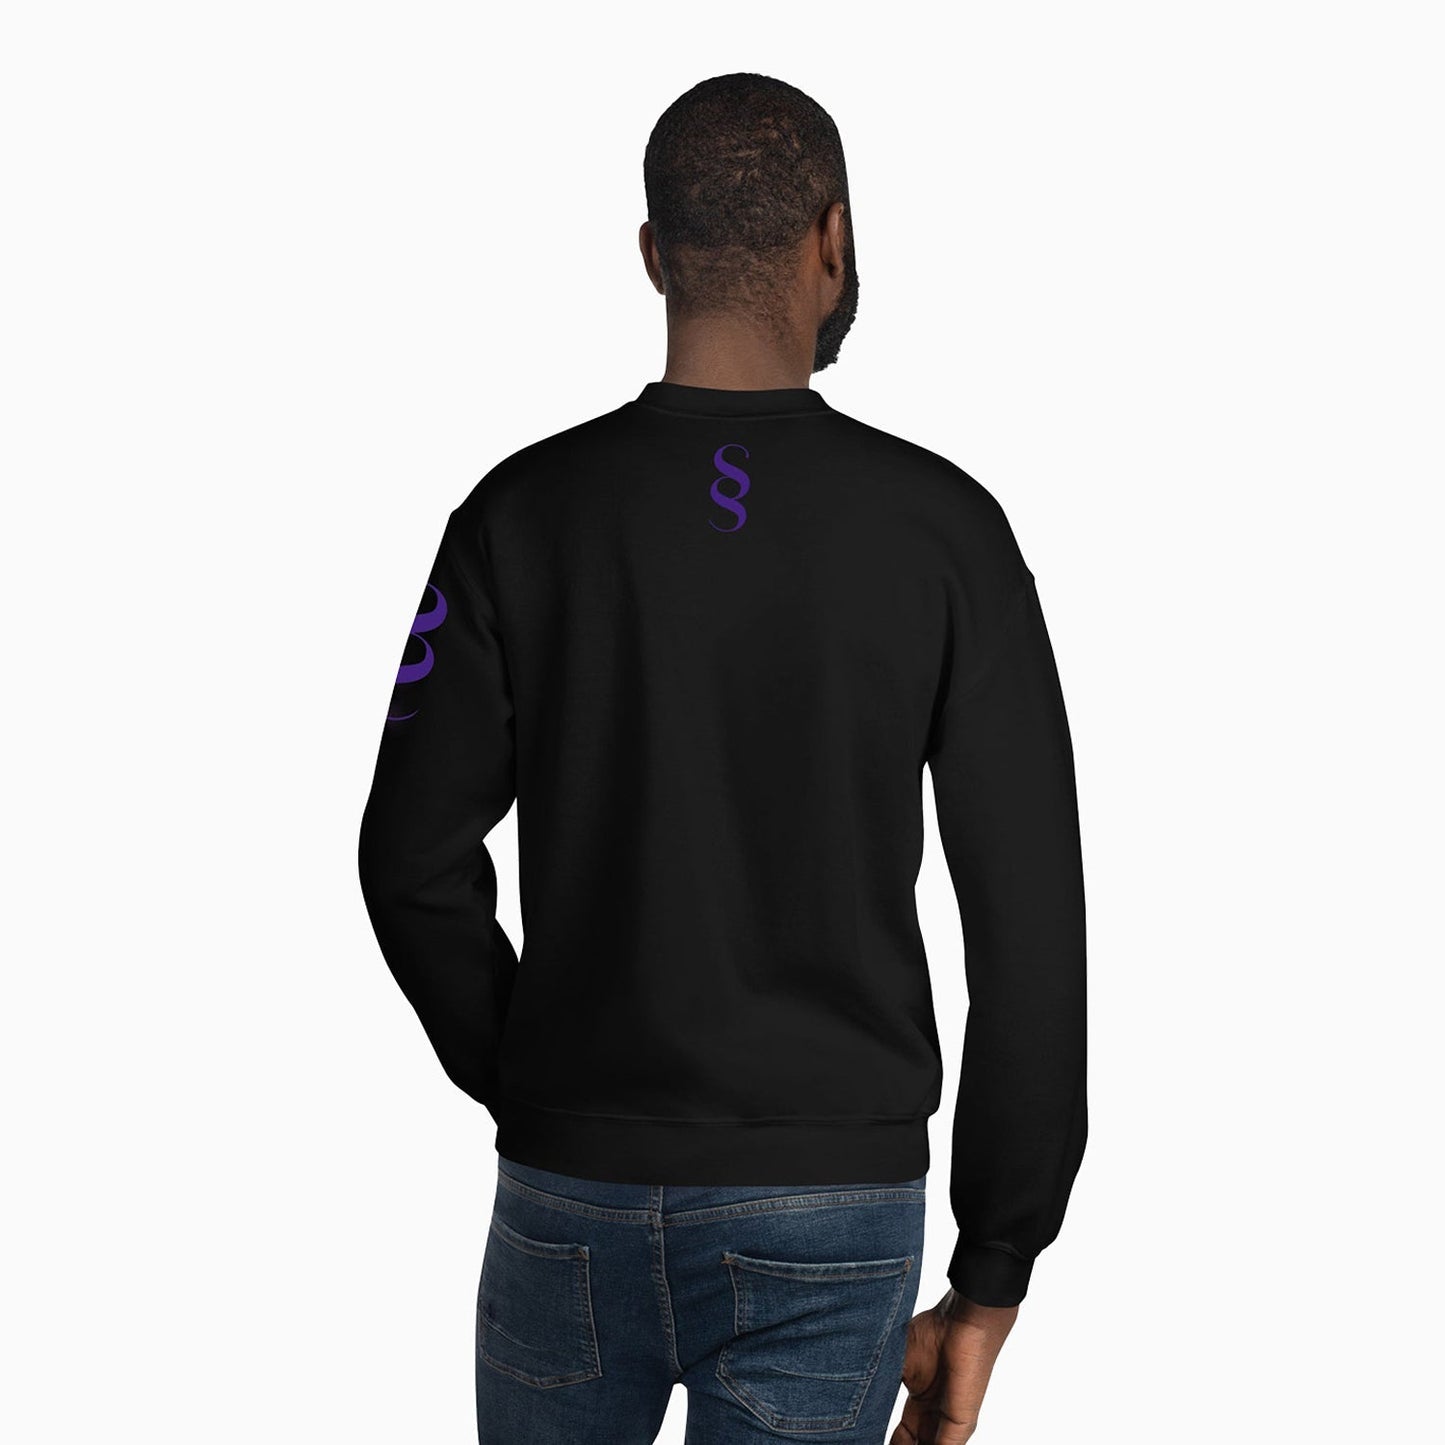 Men's Basic Printed Black Sweatshirt